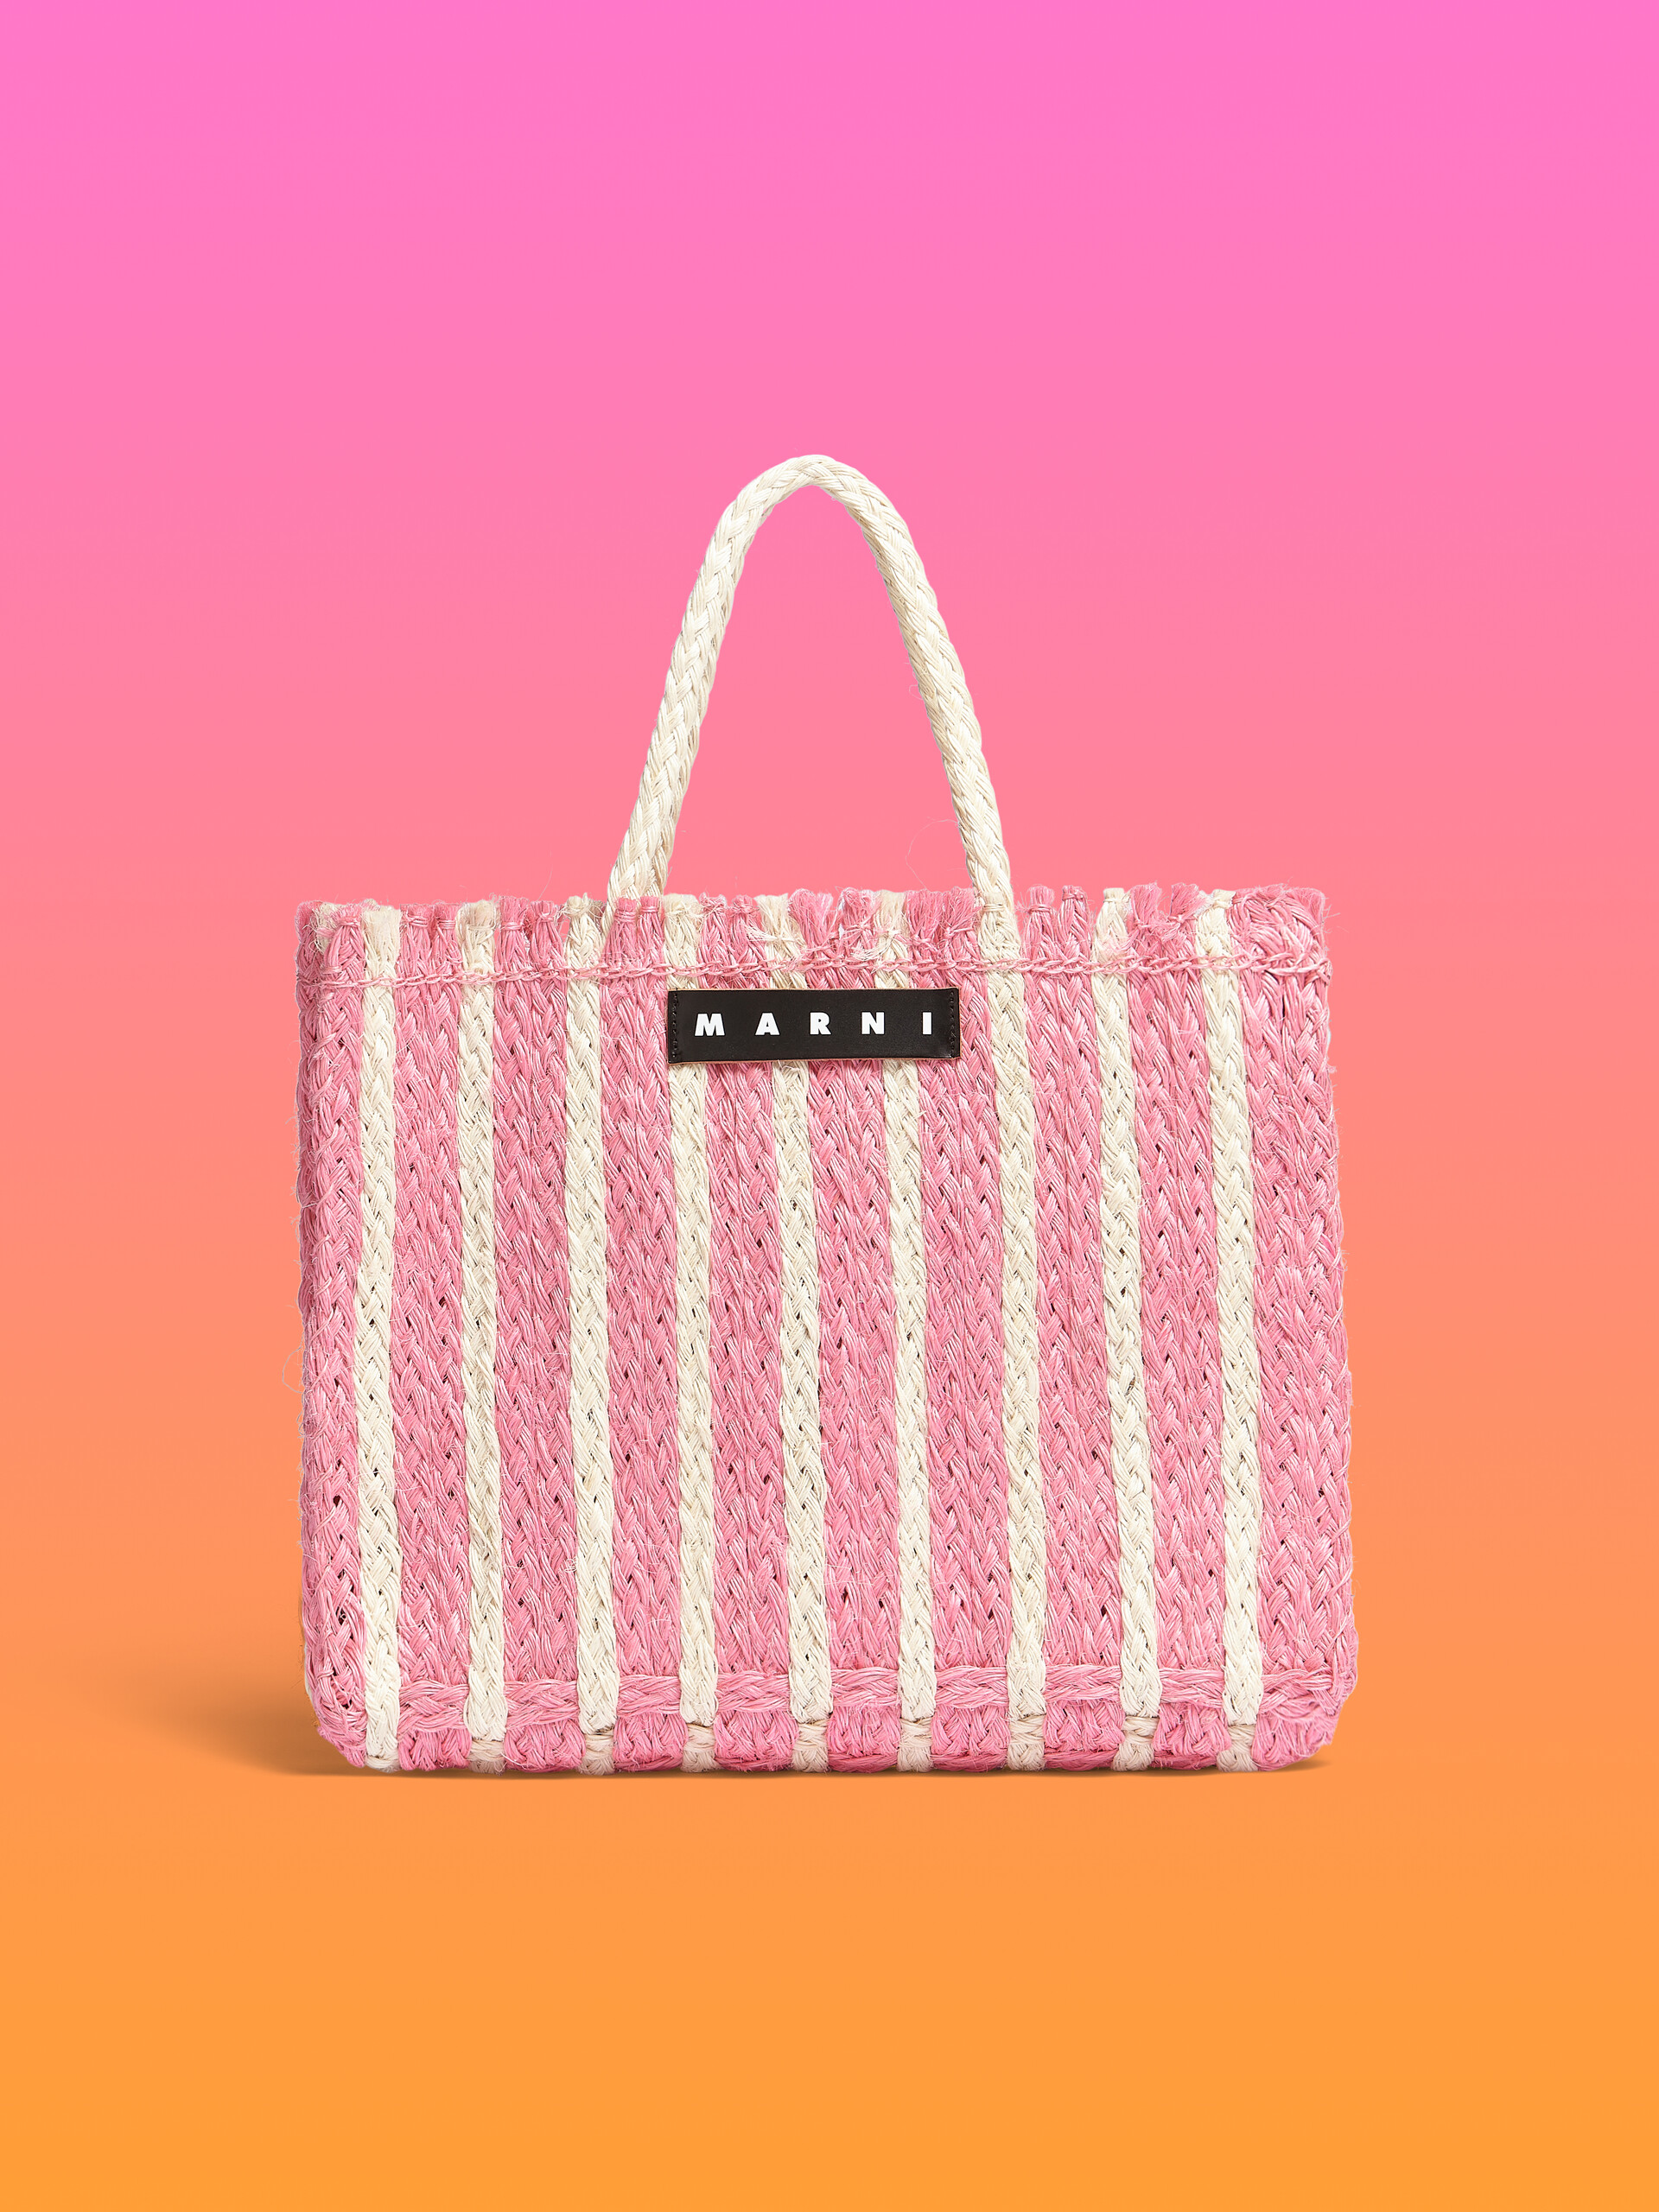 MARNI MARKET bag in pink natural fiber - Bags - Image 1